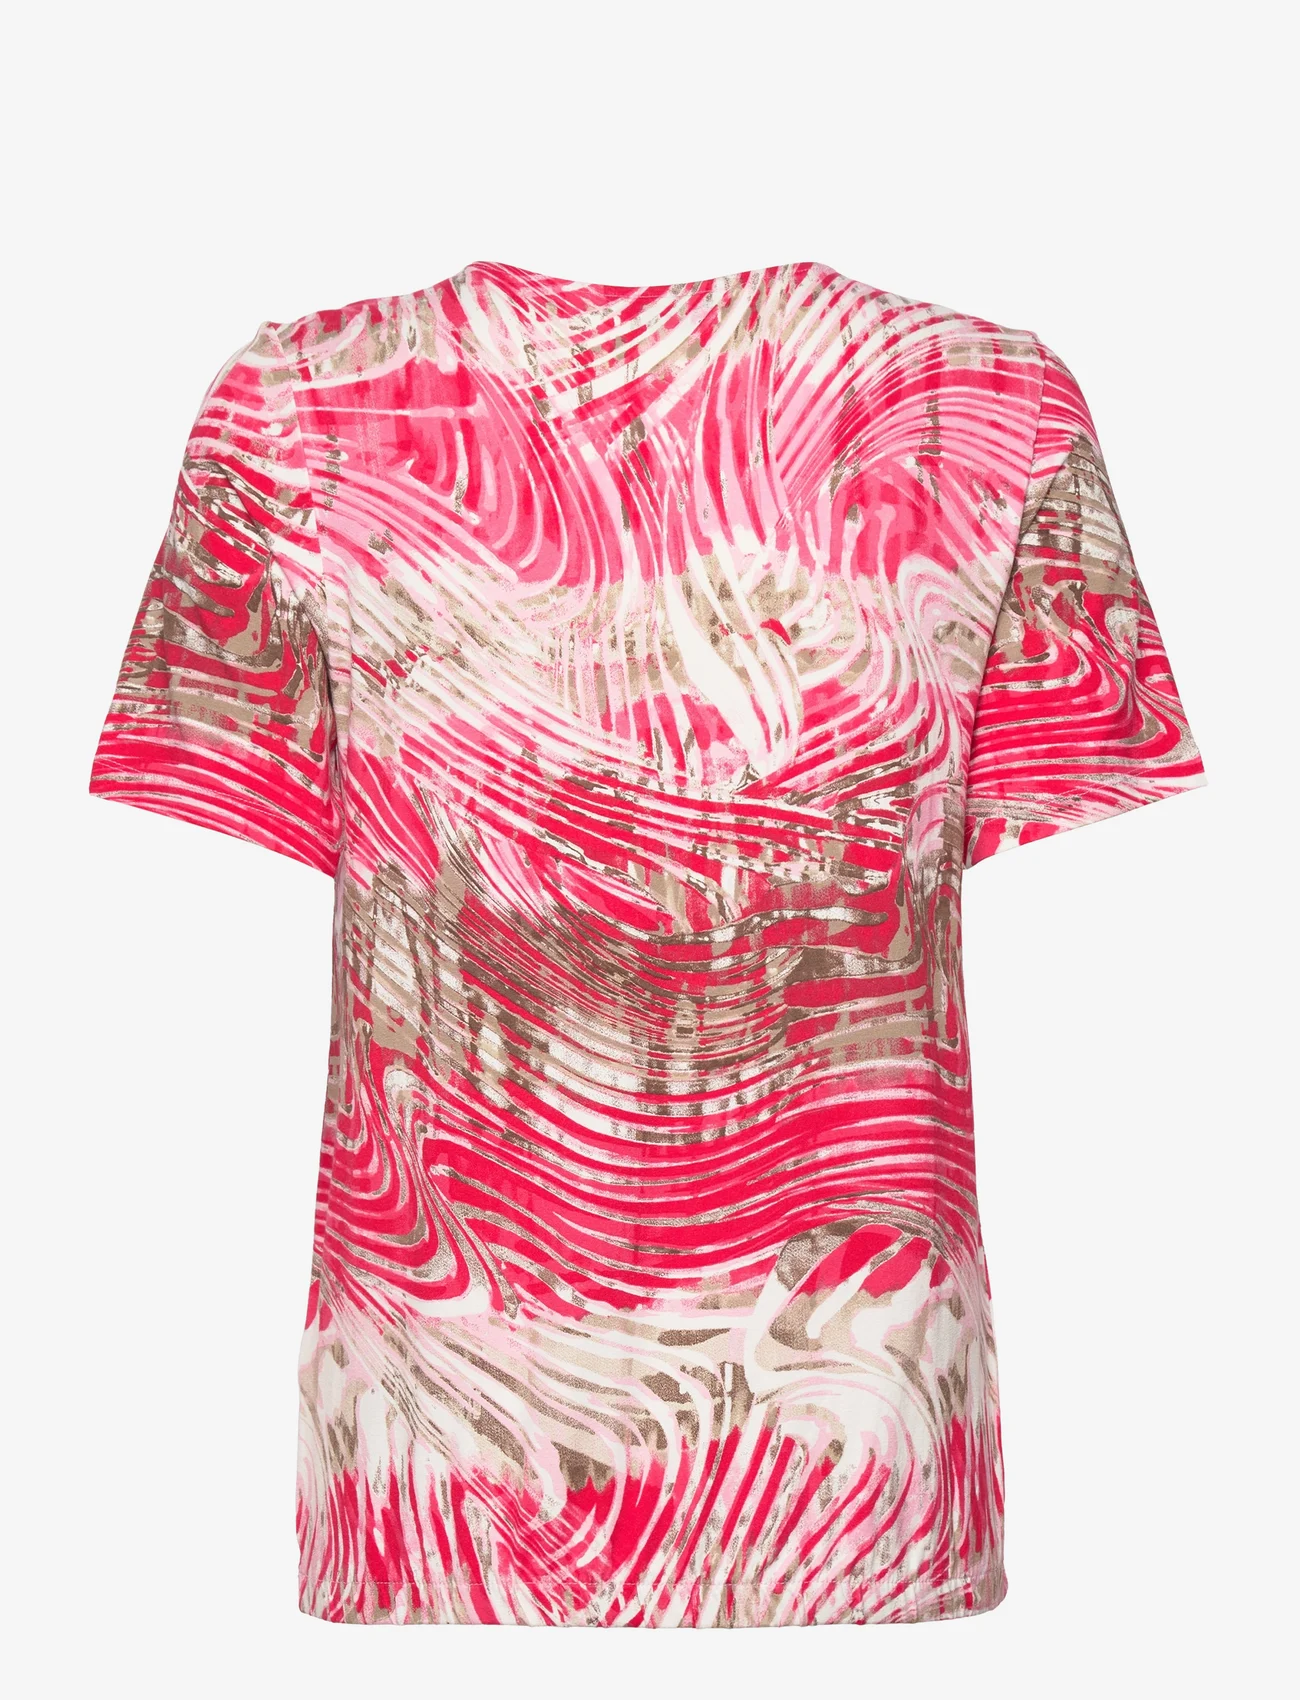 Brandtex - T-shirt s/s - t-shirts - pink mix - 1